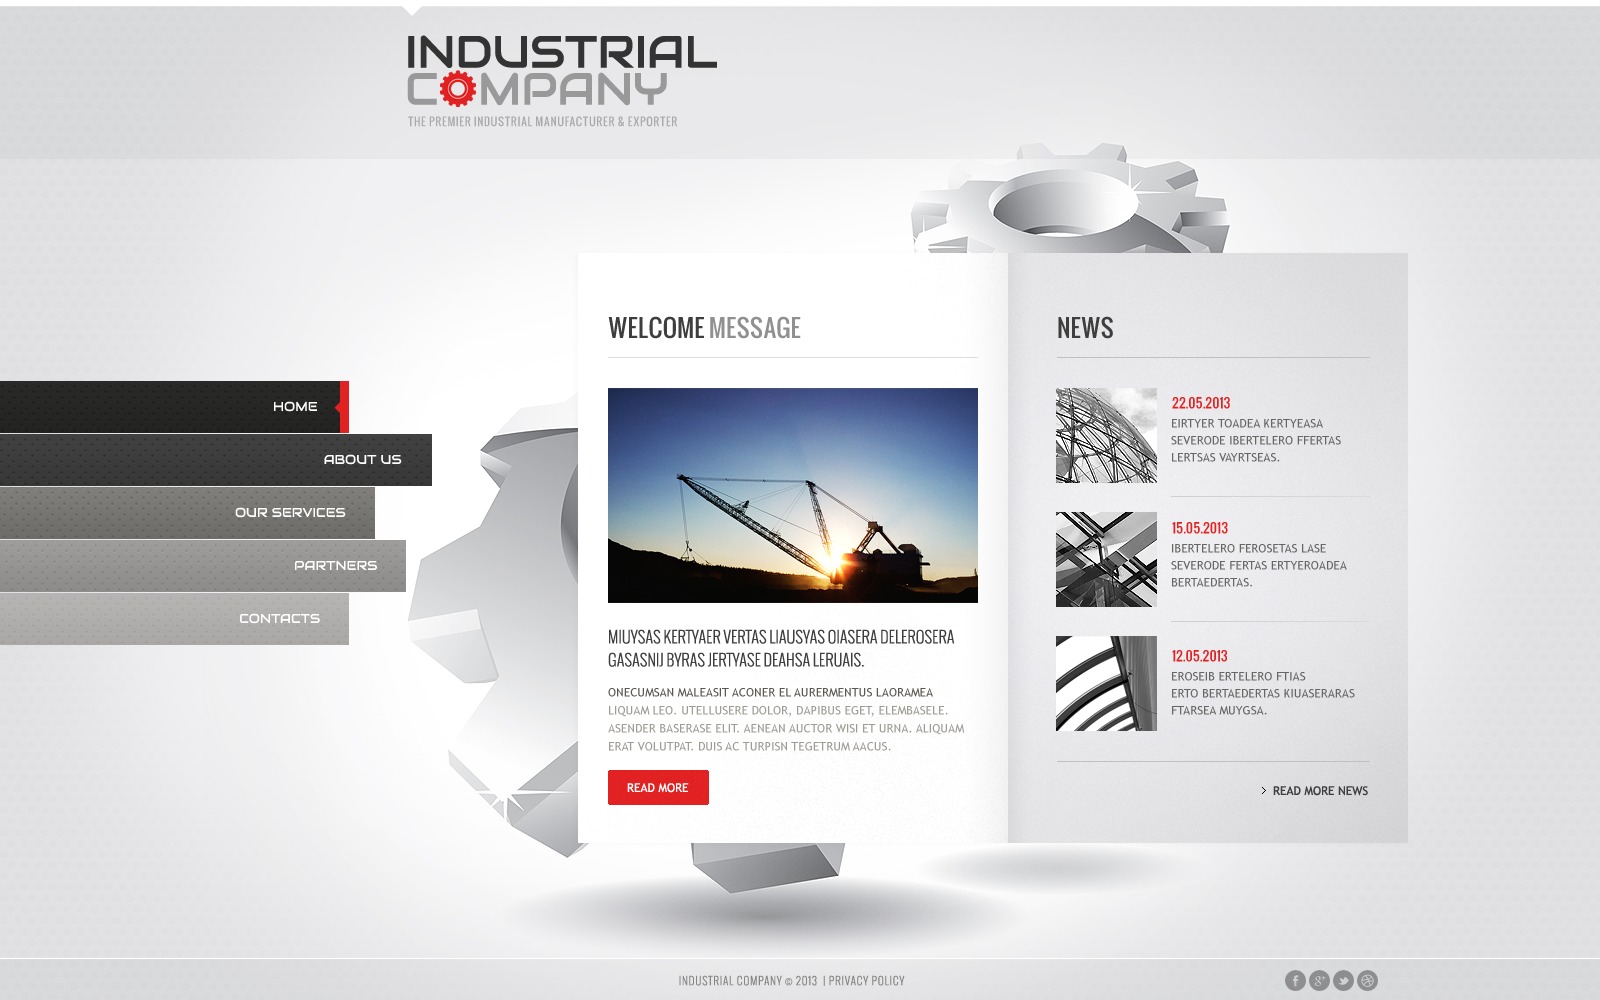 Industrial Website Template